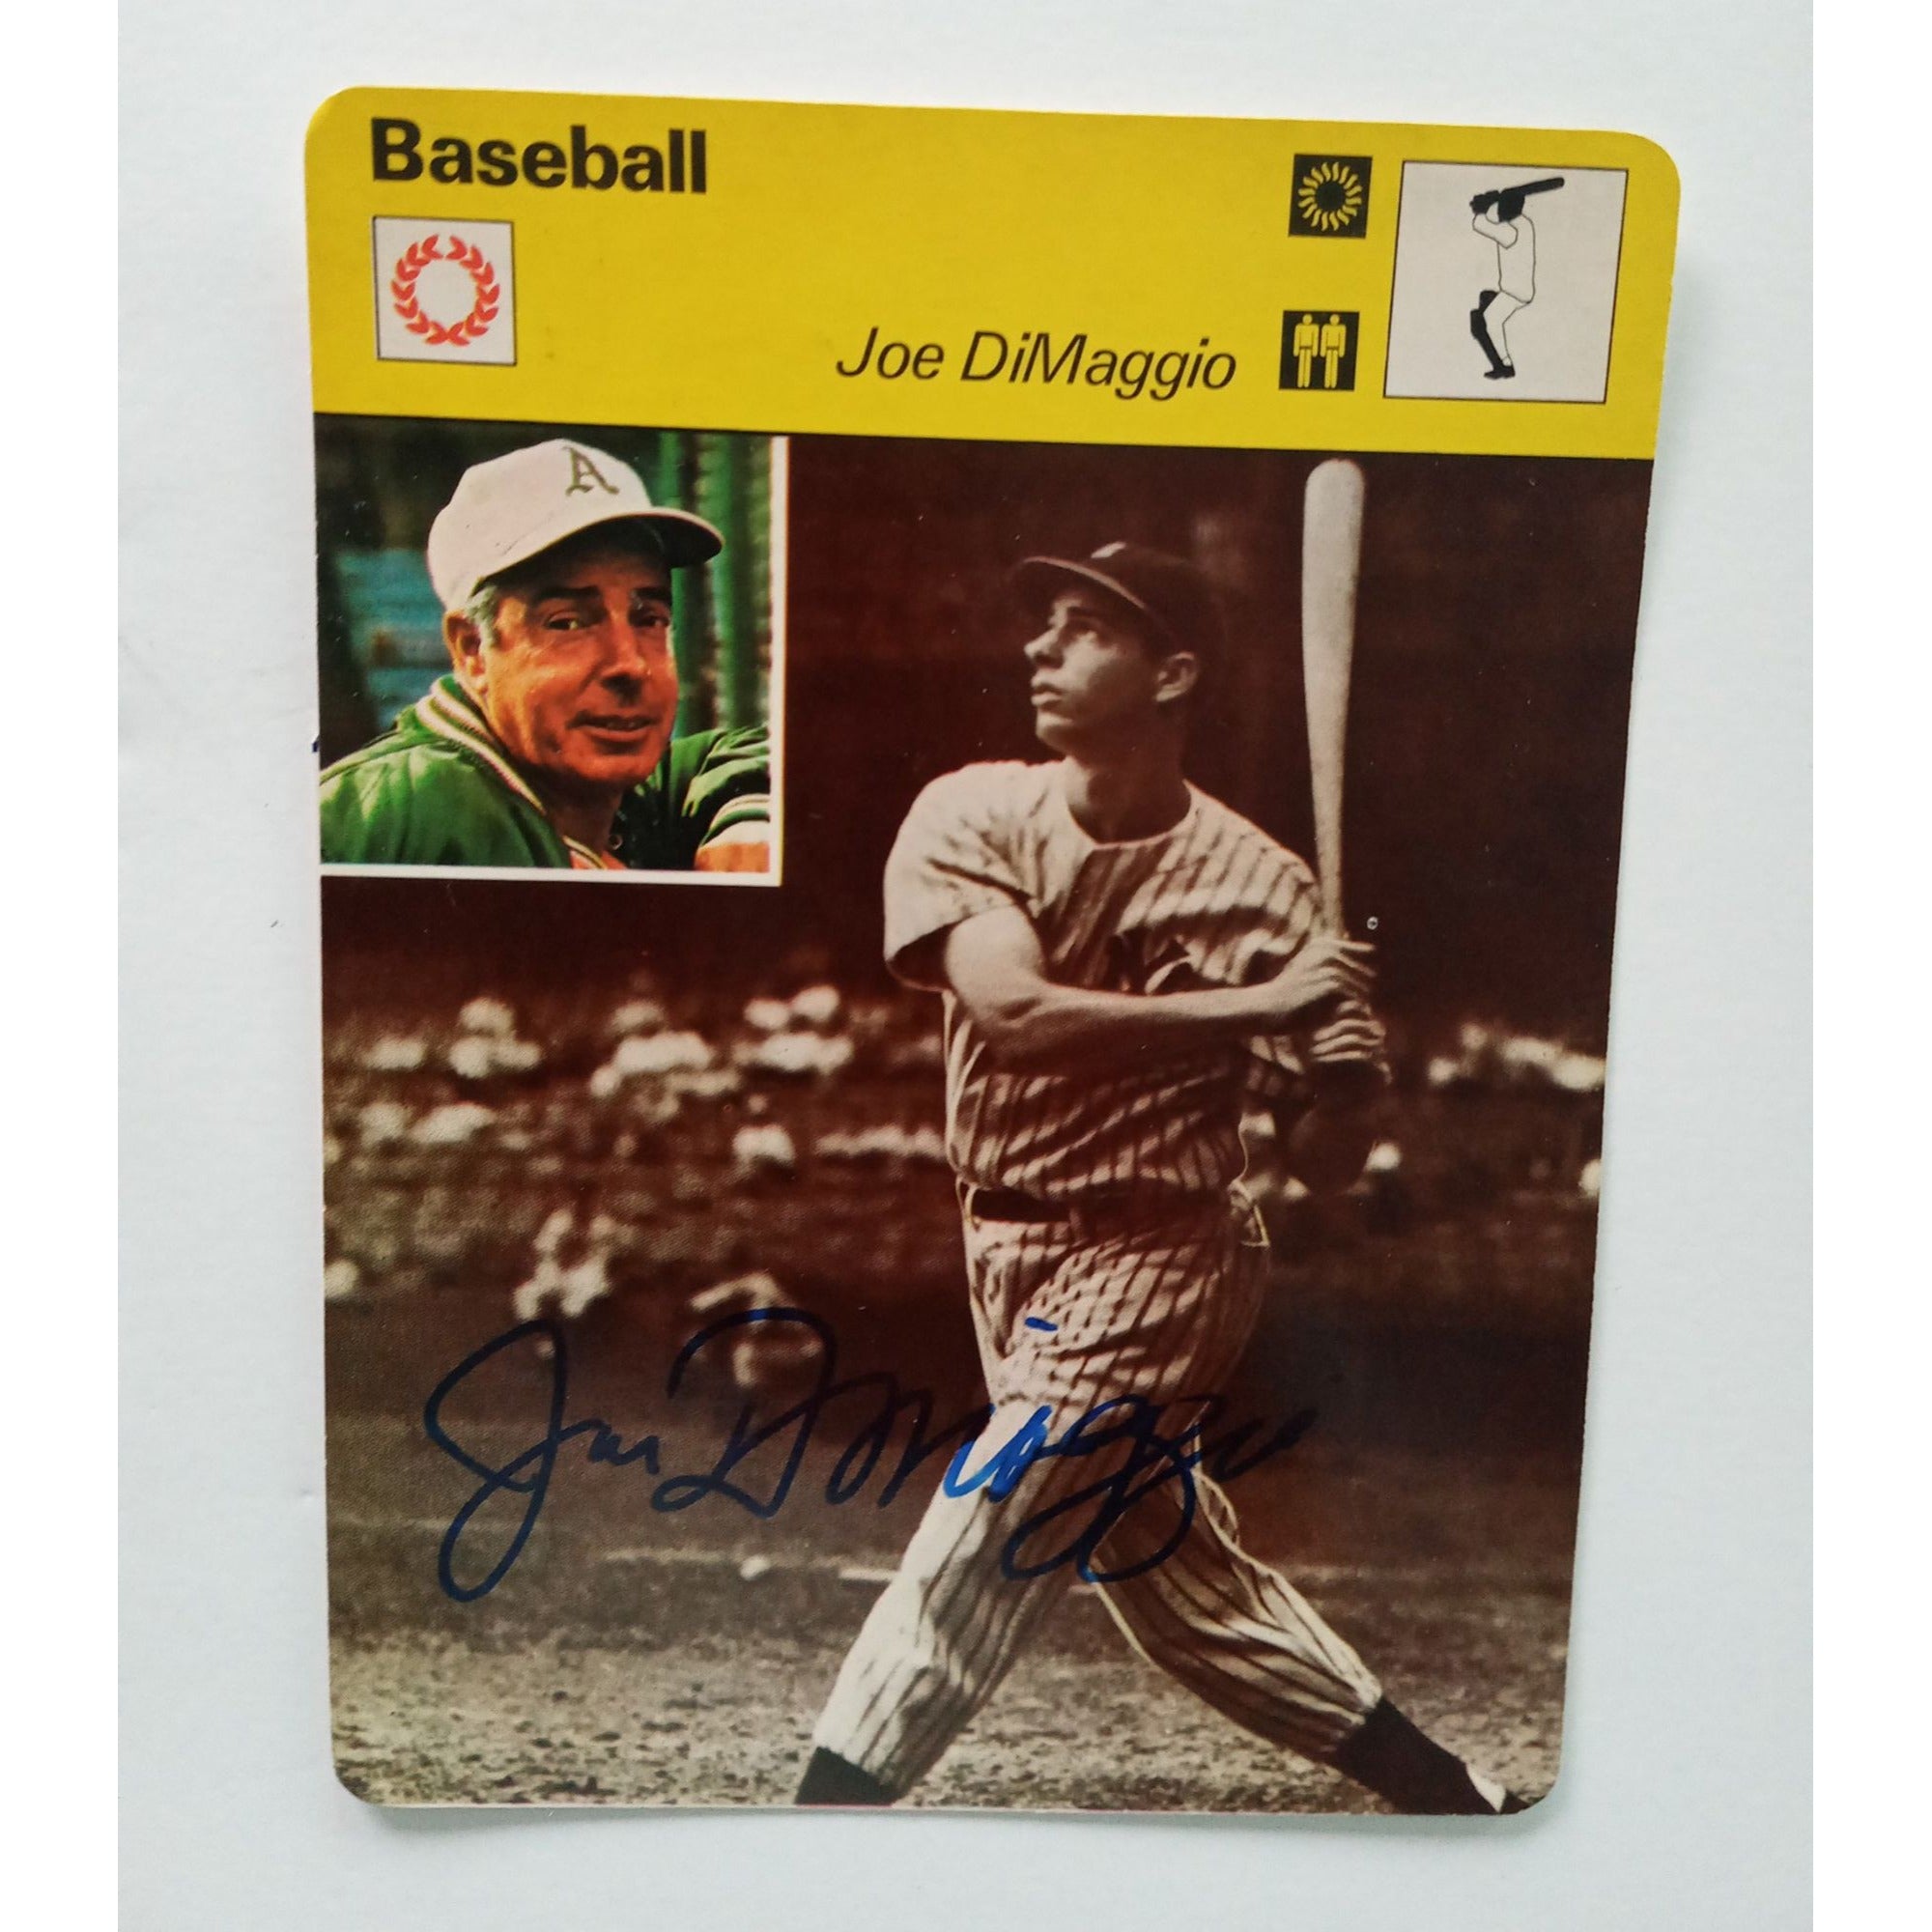 Joe Di Maggio 5 x 7 baseball card signed with proof